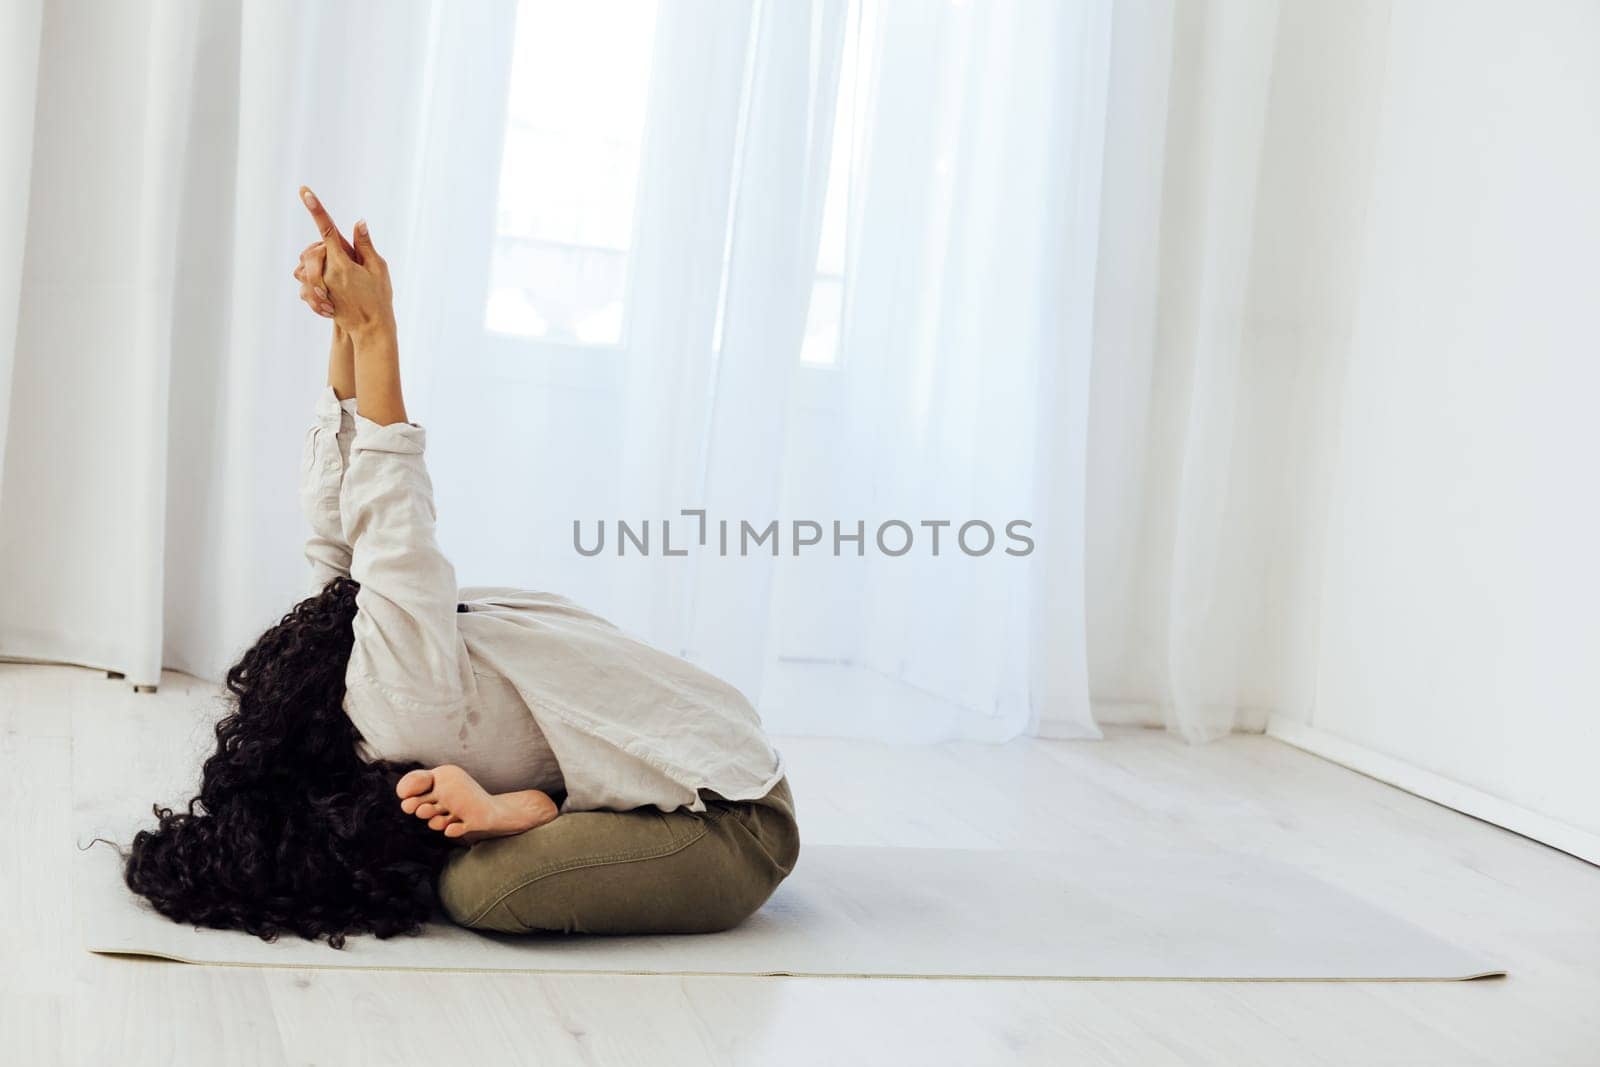 Female engaged in yoga asana gymnastics sport